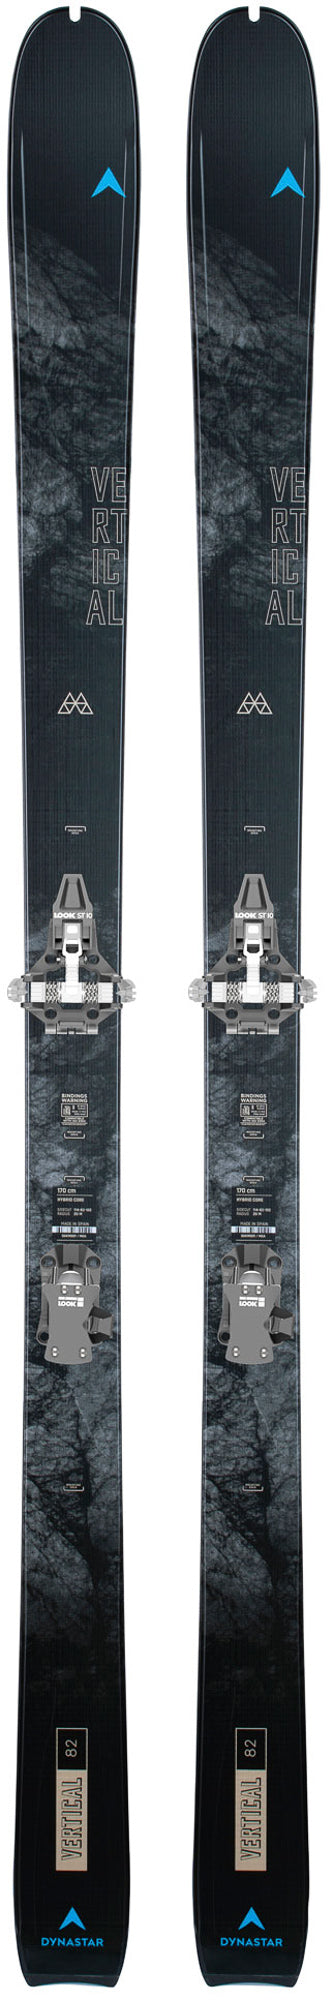 Pack rando neuf skis Dynastar M-Vertical 82 + Look ST 10 + peaux - neuf déstockage